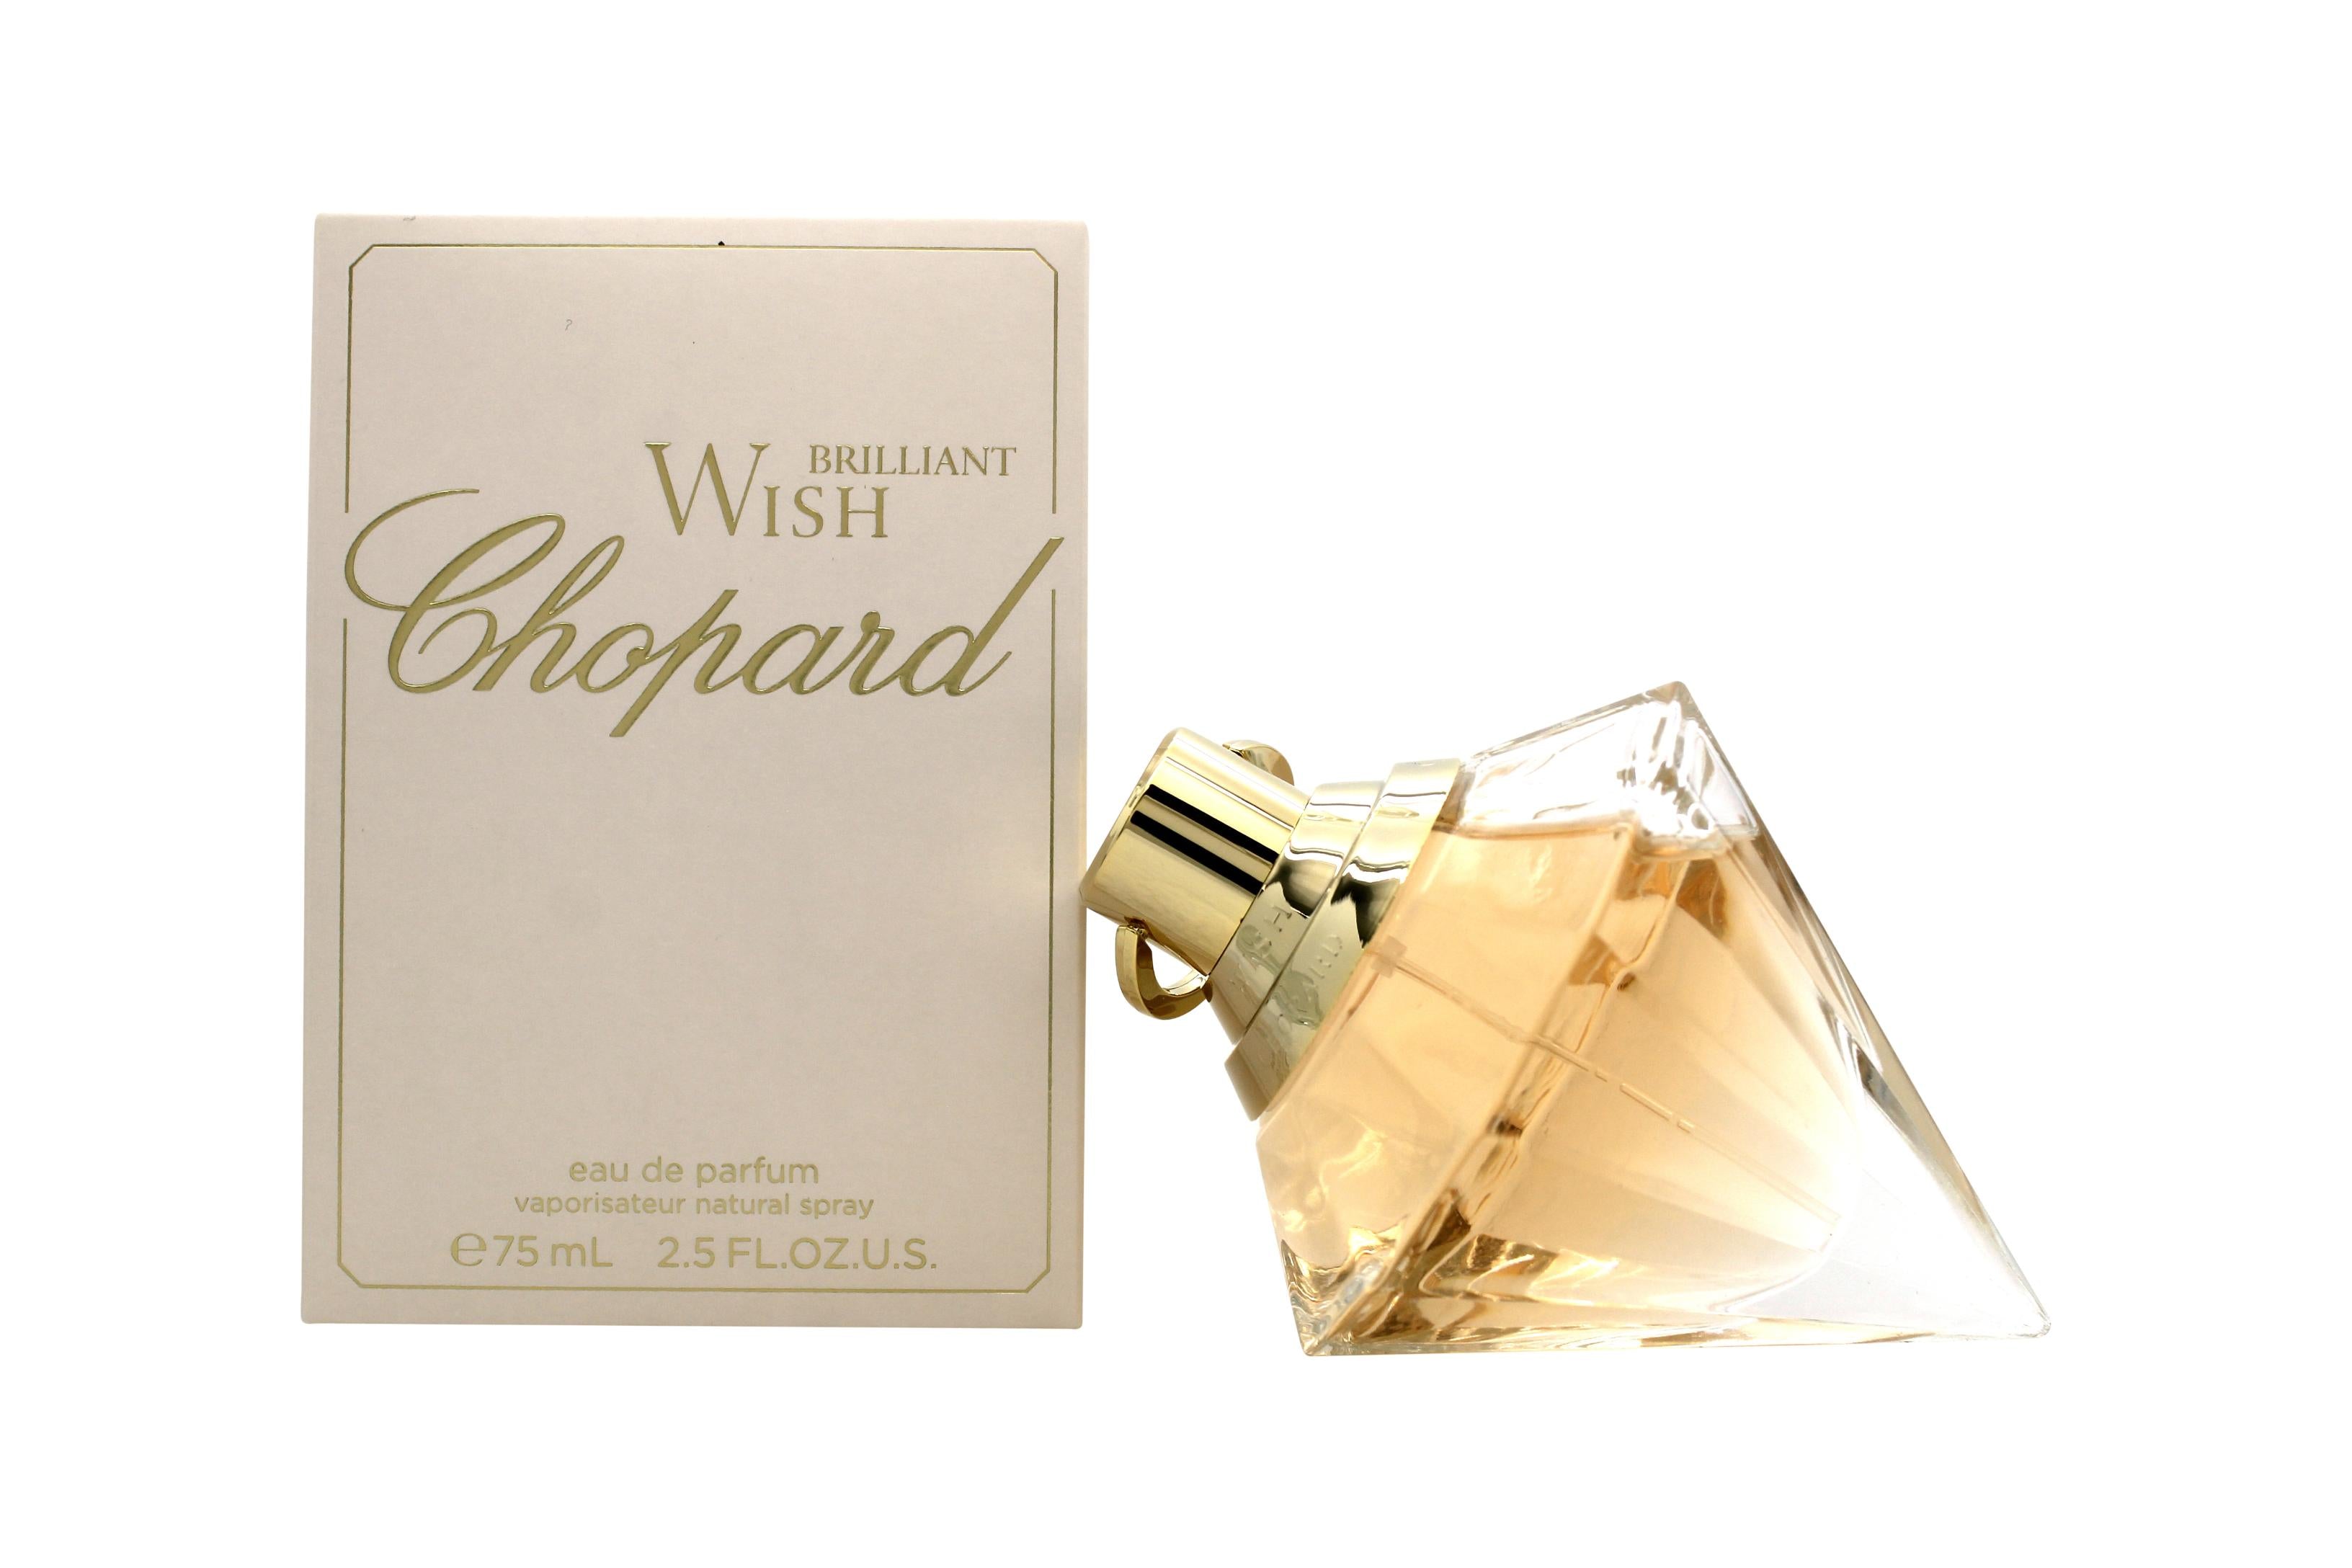 View Chopard Brilliant Wish Eau de Parfum 75ml Spray information